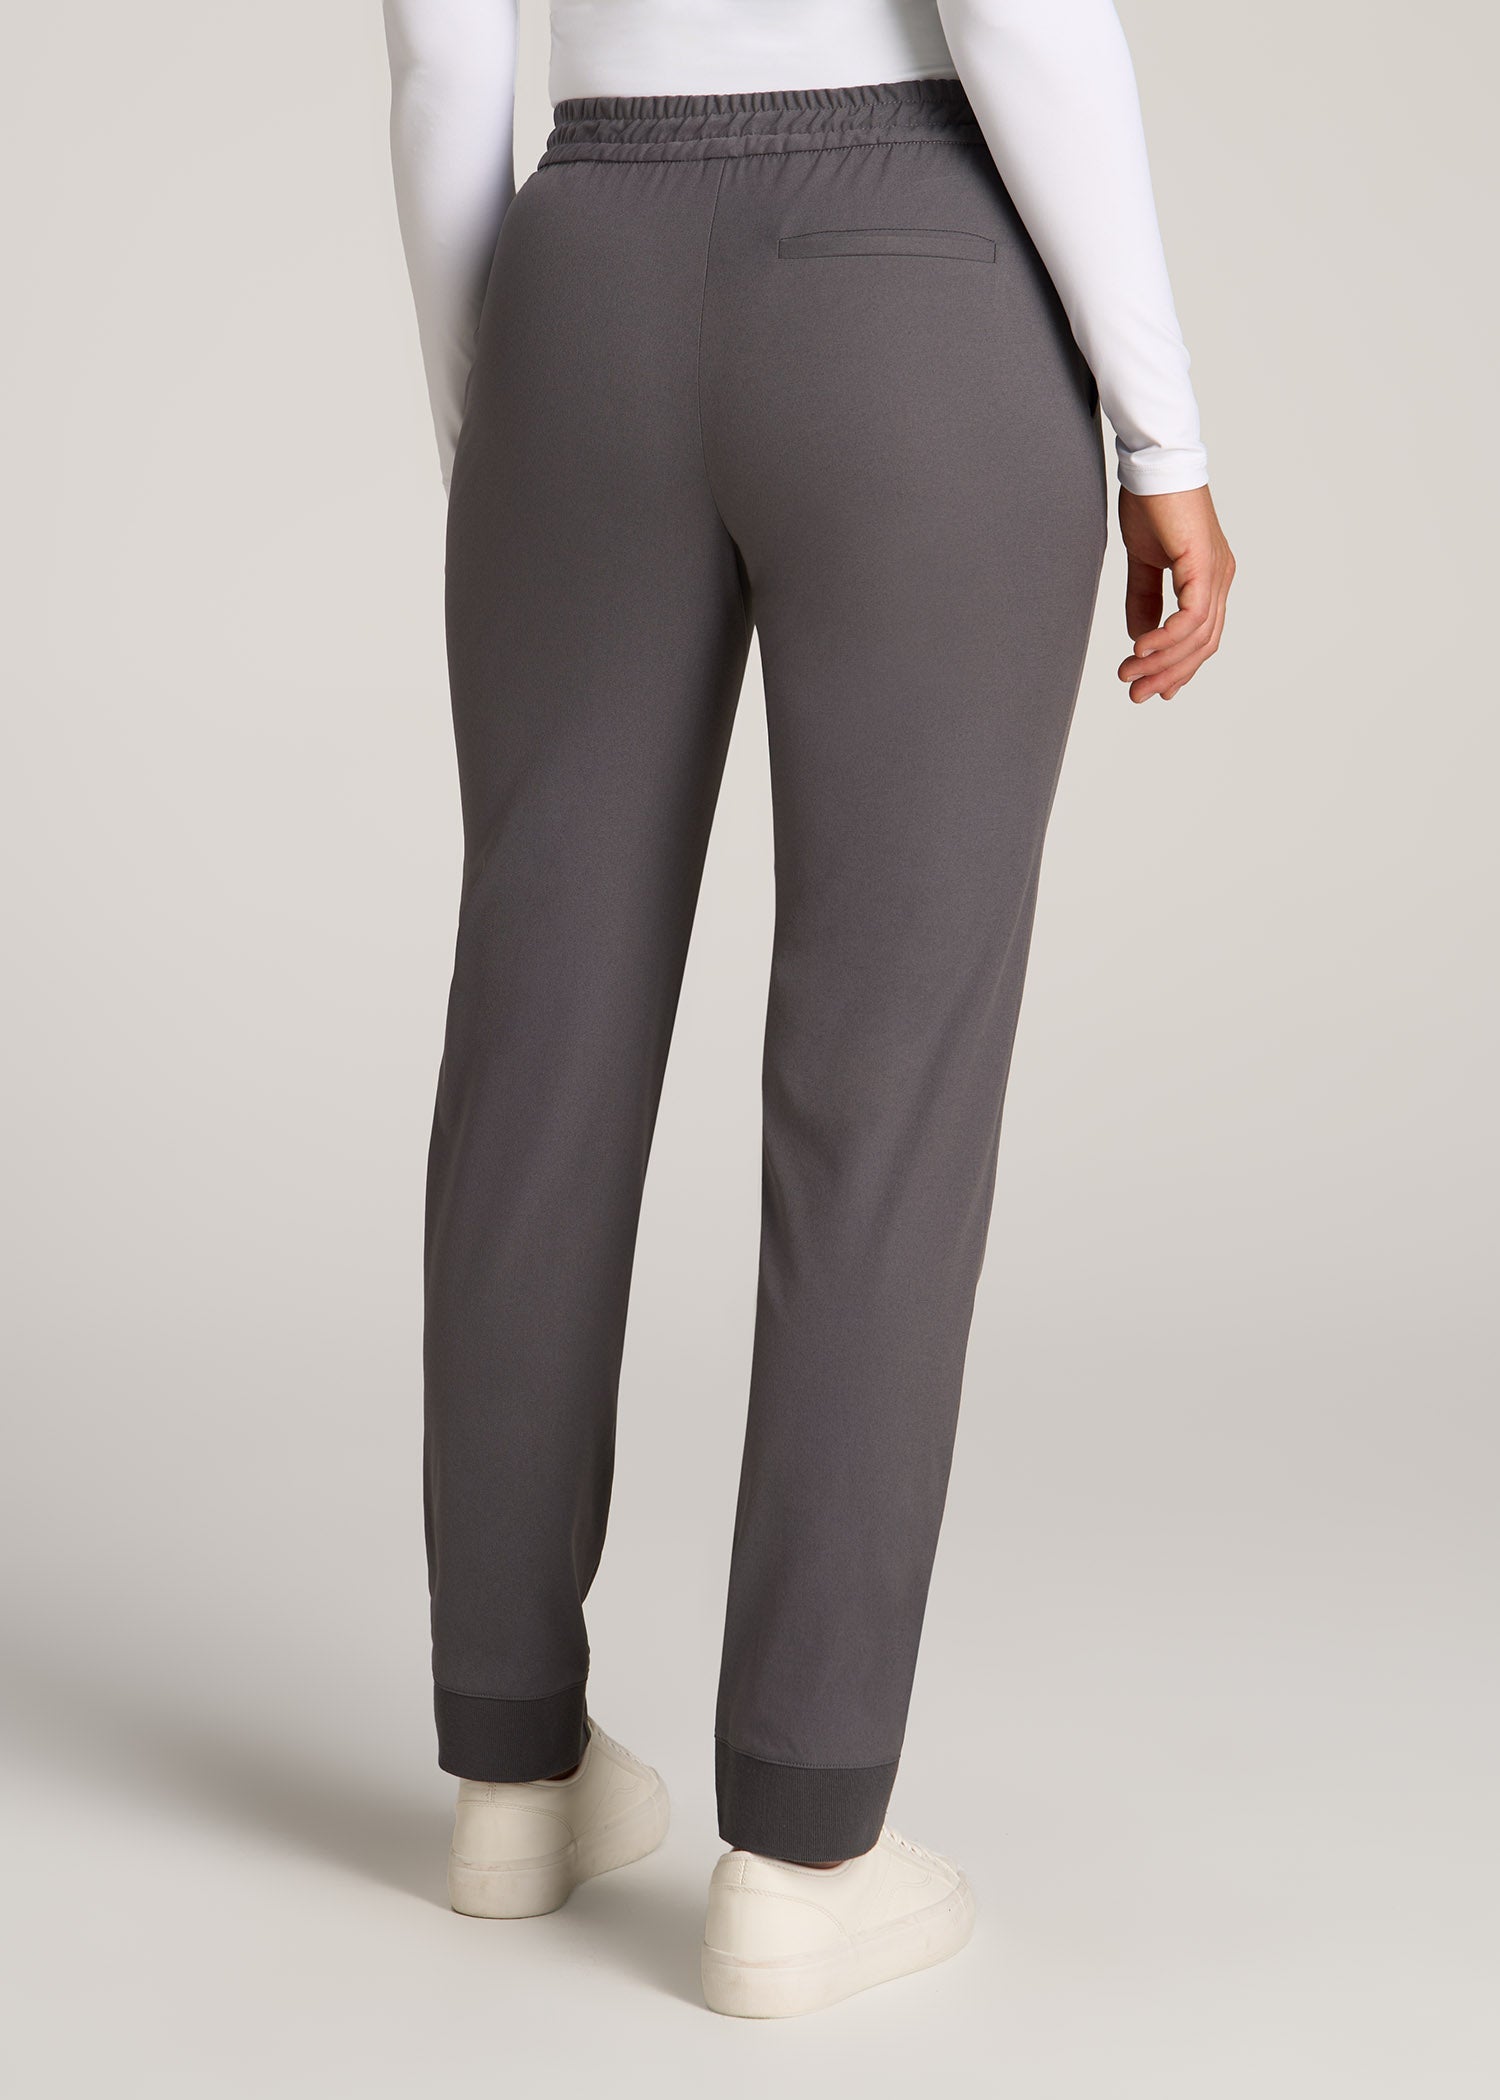  Side Pockets,Womens Straight Leg Yoga Pants Slim Fit Workout  Pants,31,Black,XS